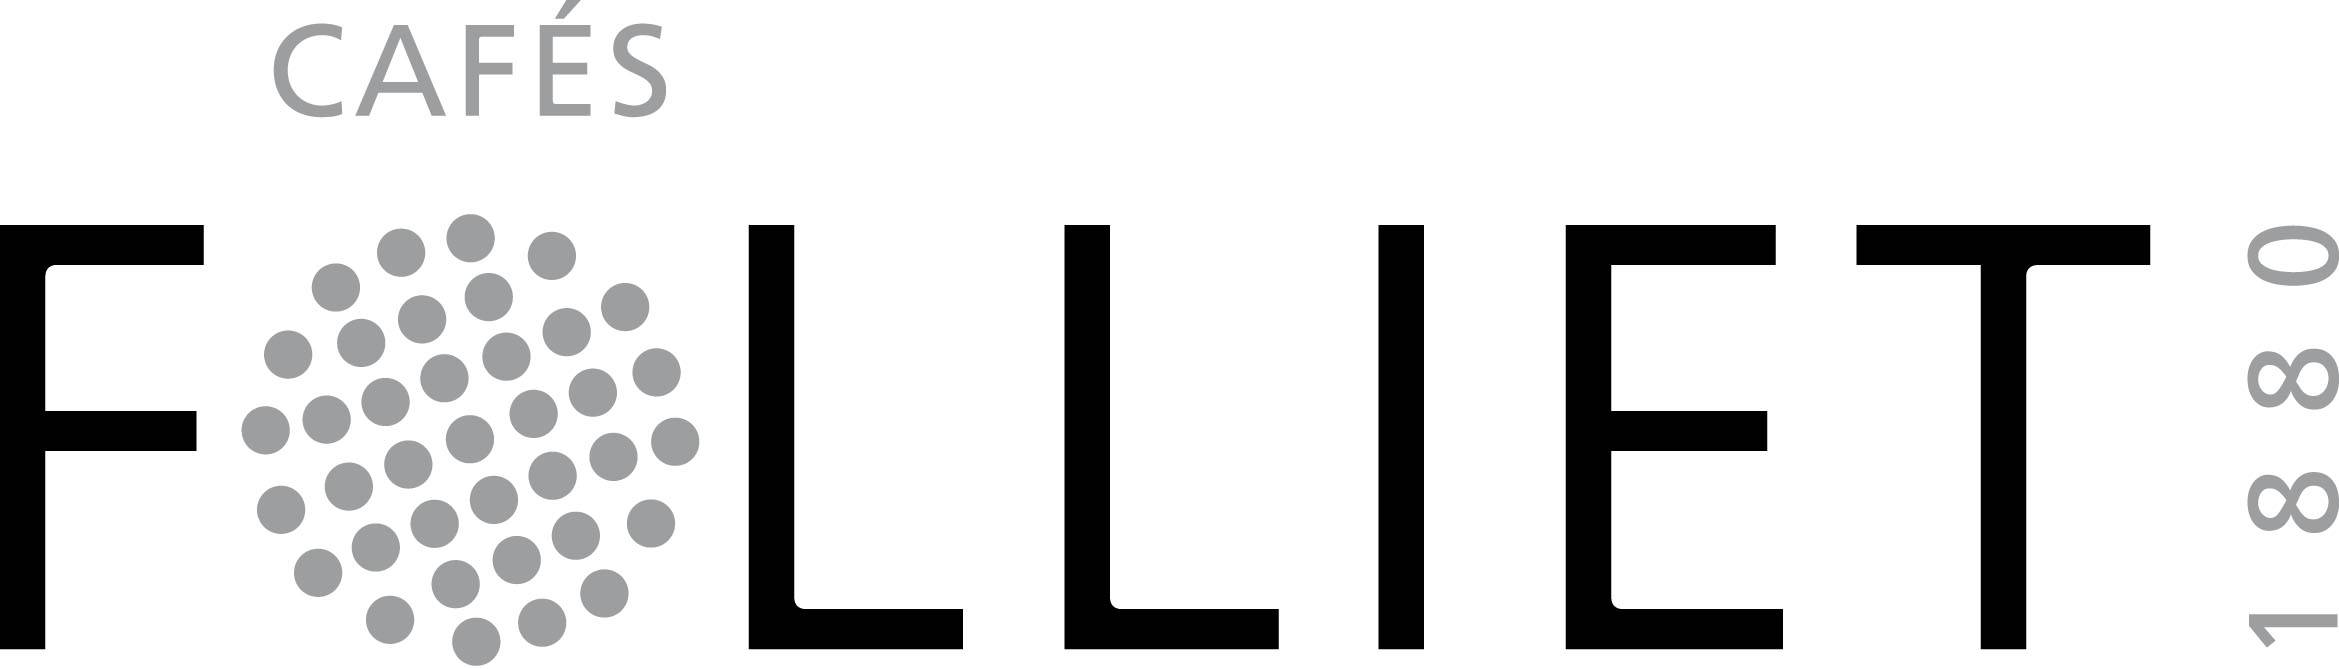 Logo Cafés Folliet